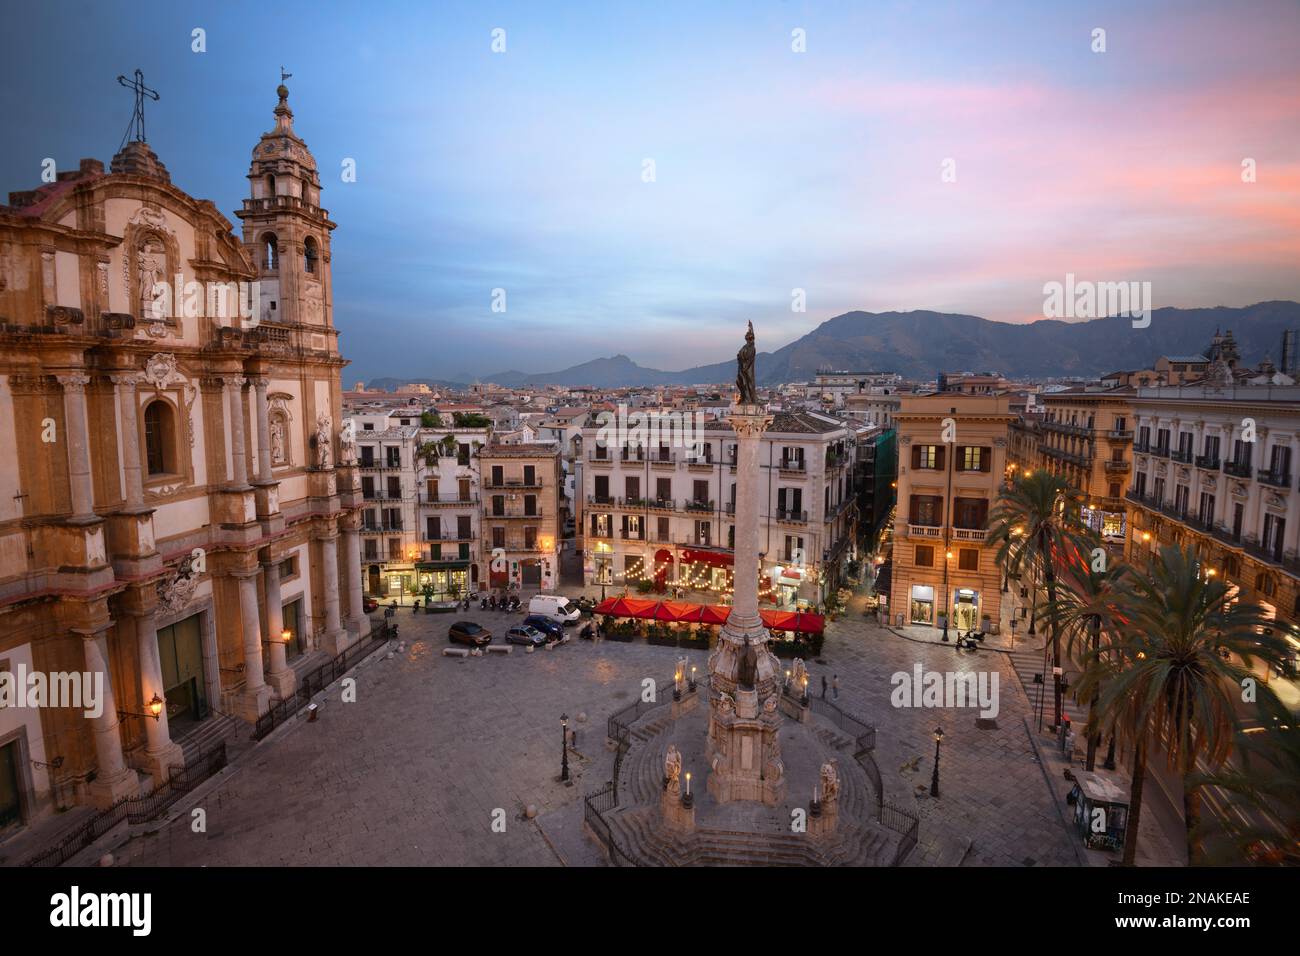 Palermo, Italy Overlooking Piazza San Domenico at dusk. Stock Photo